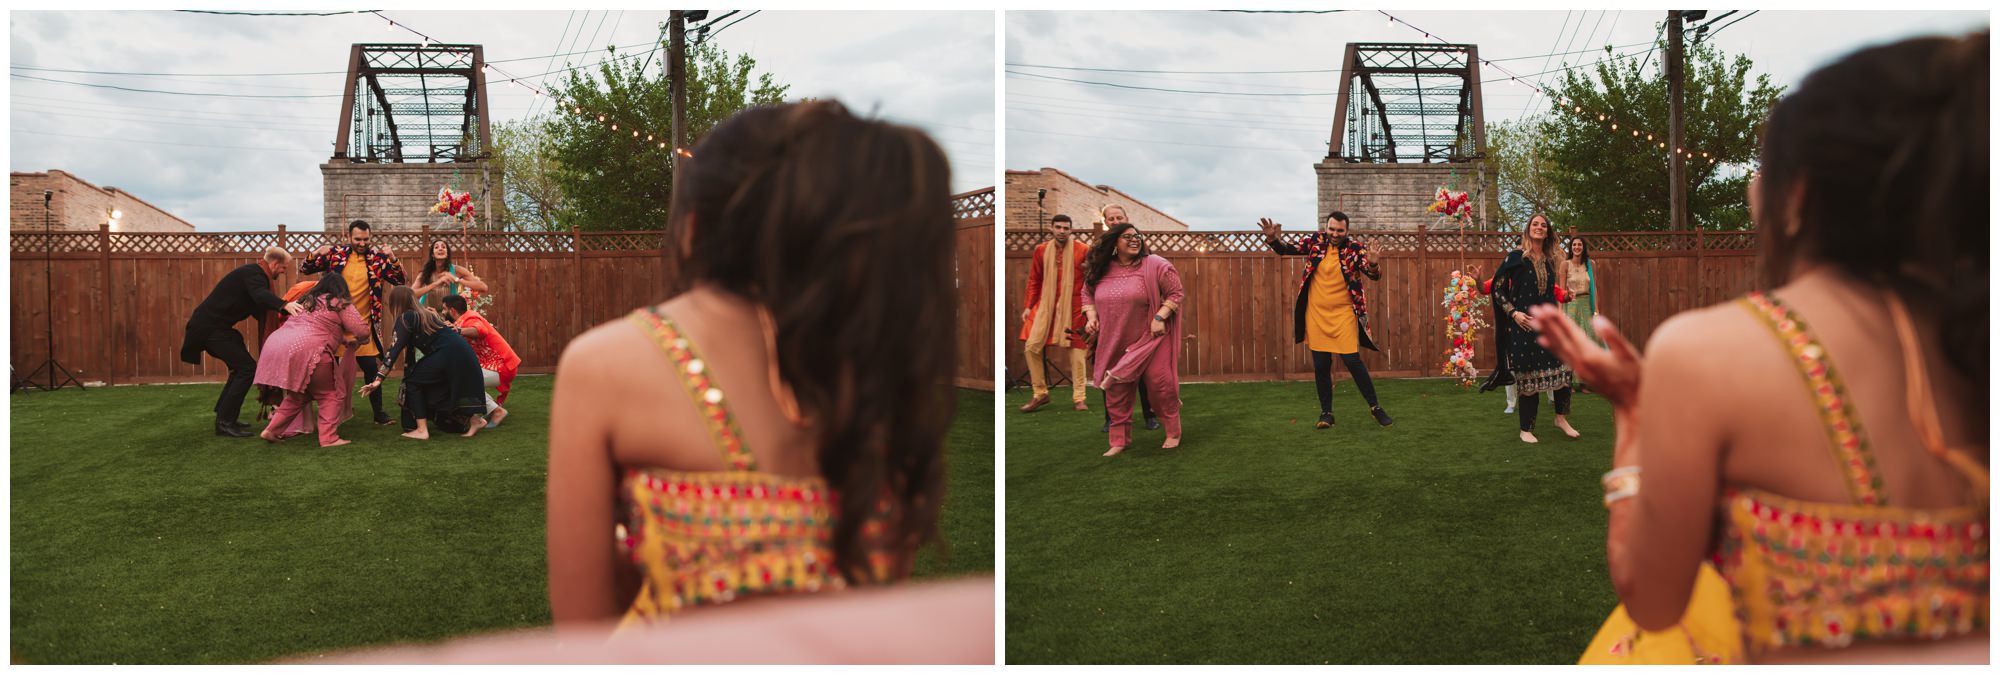 Sangeet Ceremony, Indian wedding traditions, Indian wedding dances